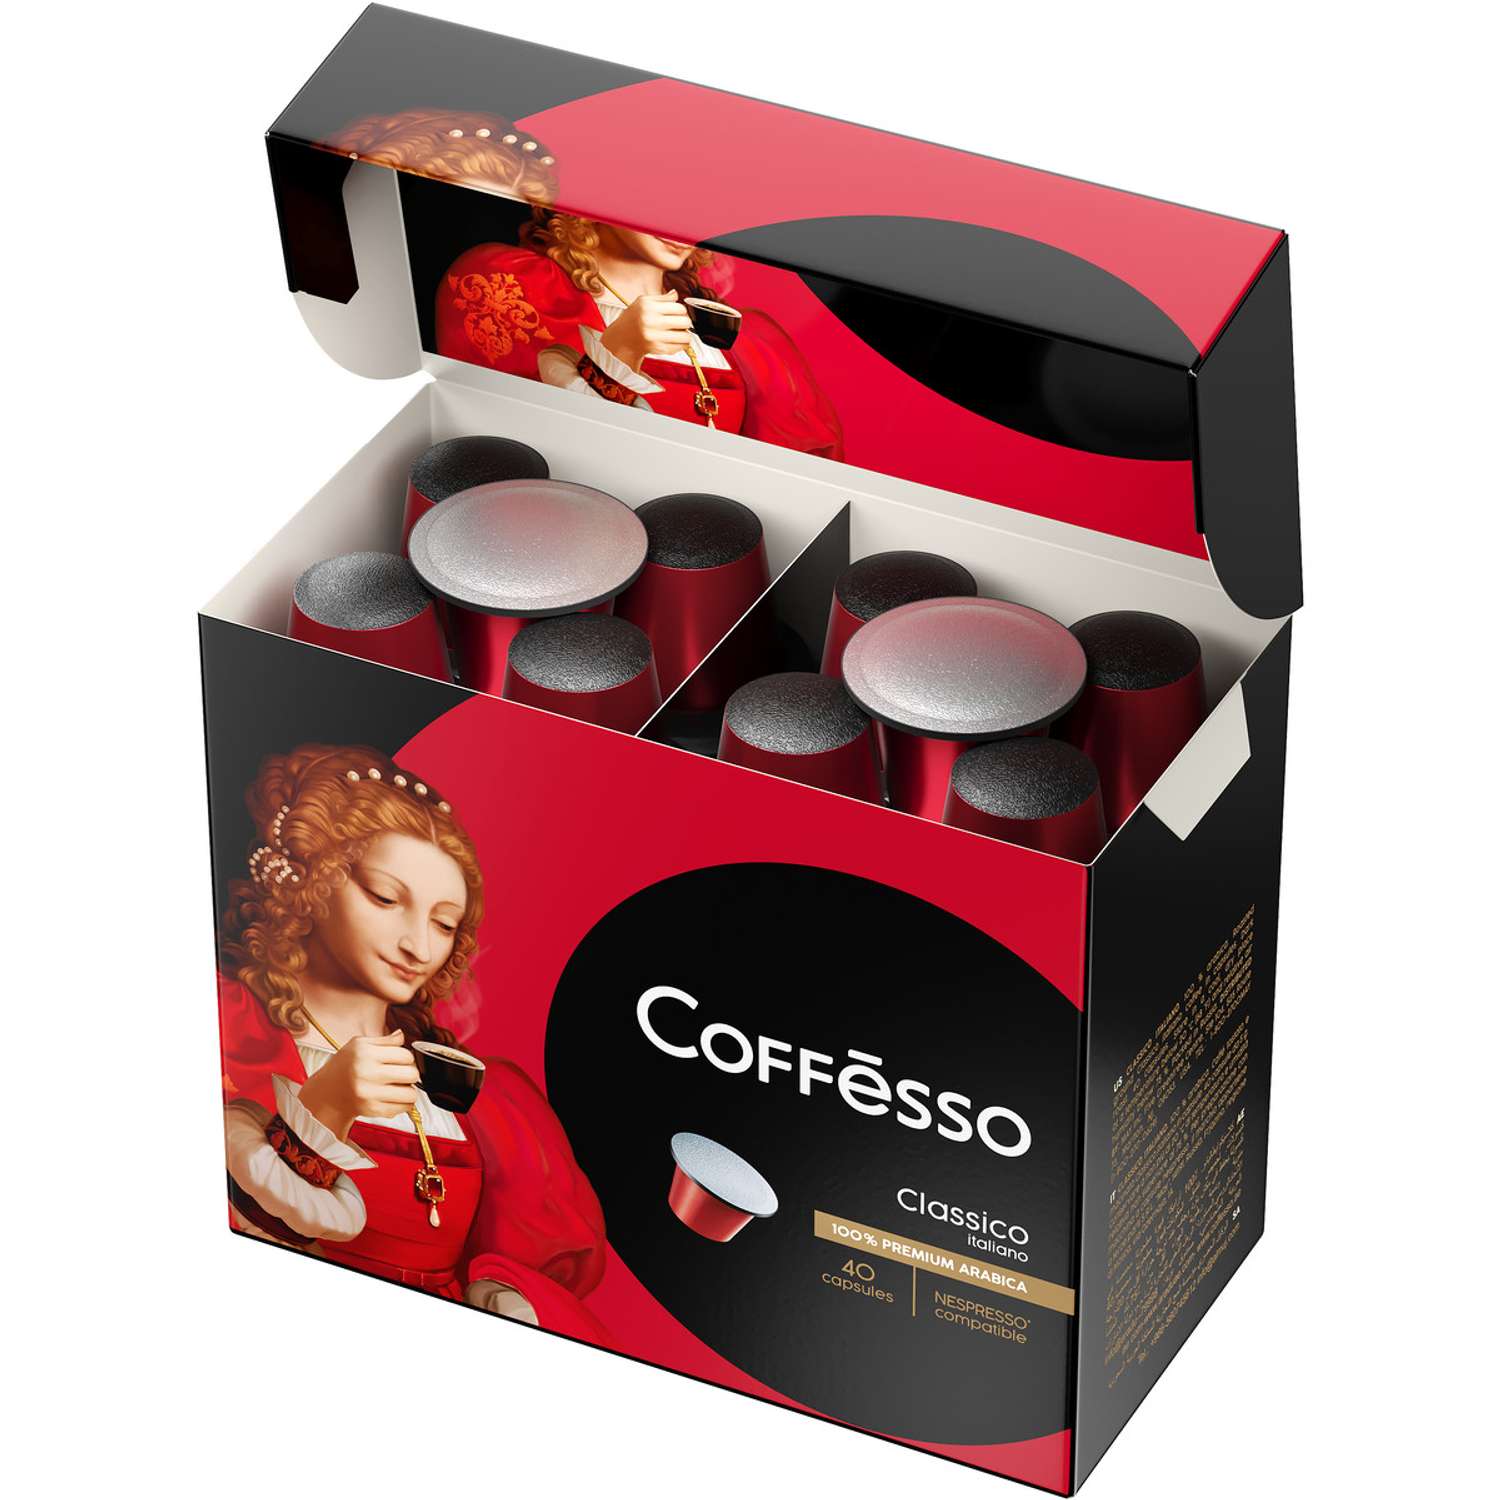 Кофе в капсулах Coffesso Classico Italiano набор 40 шт по 5 гр - фото 4